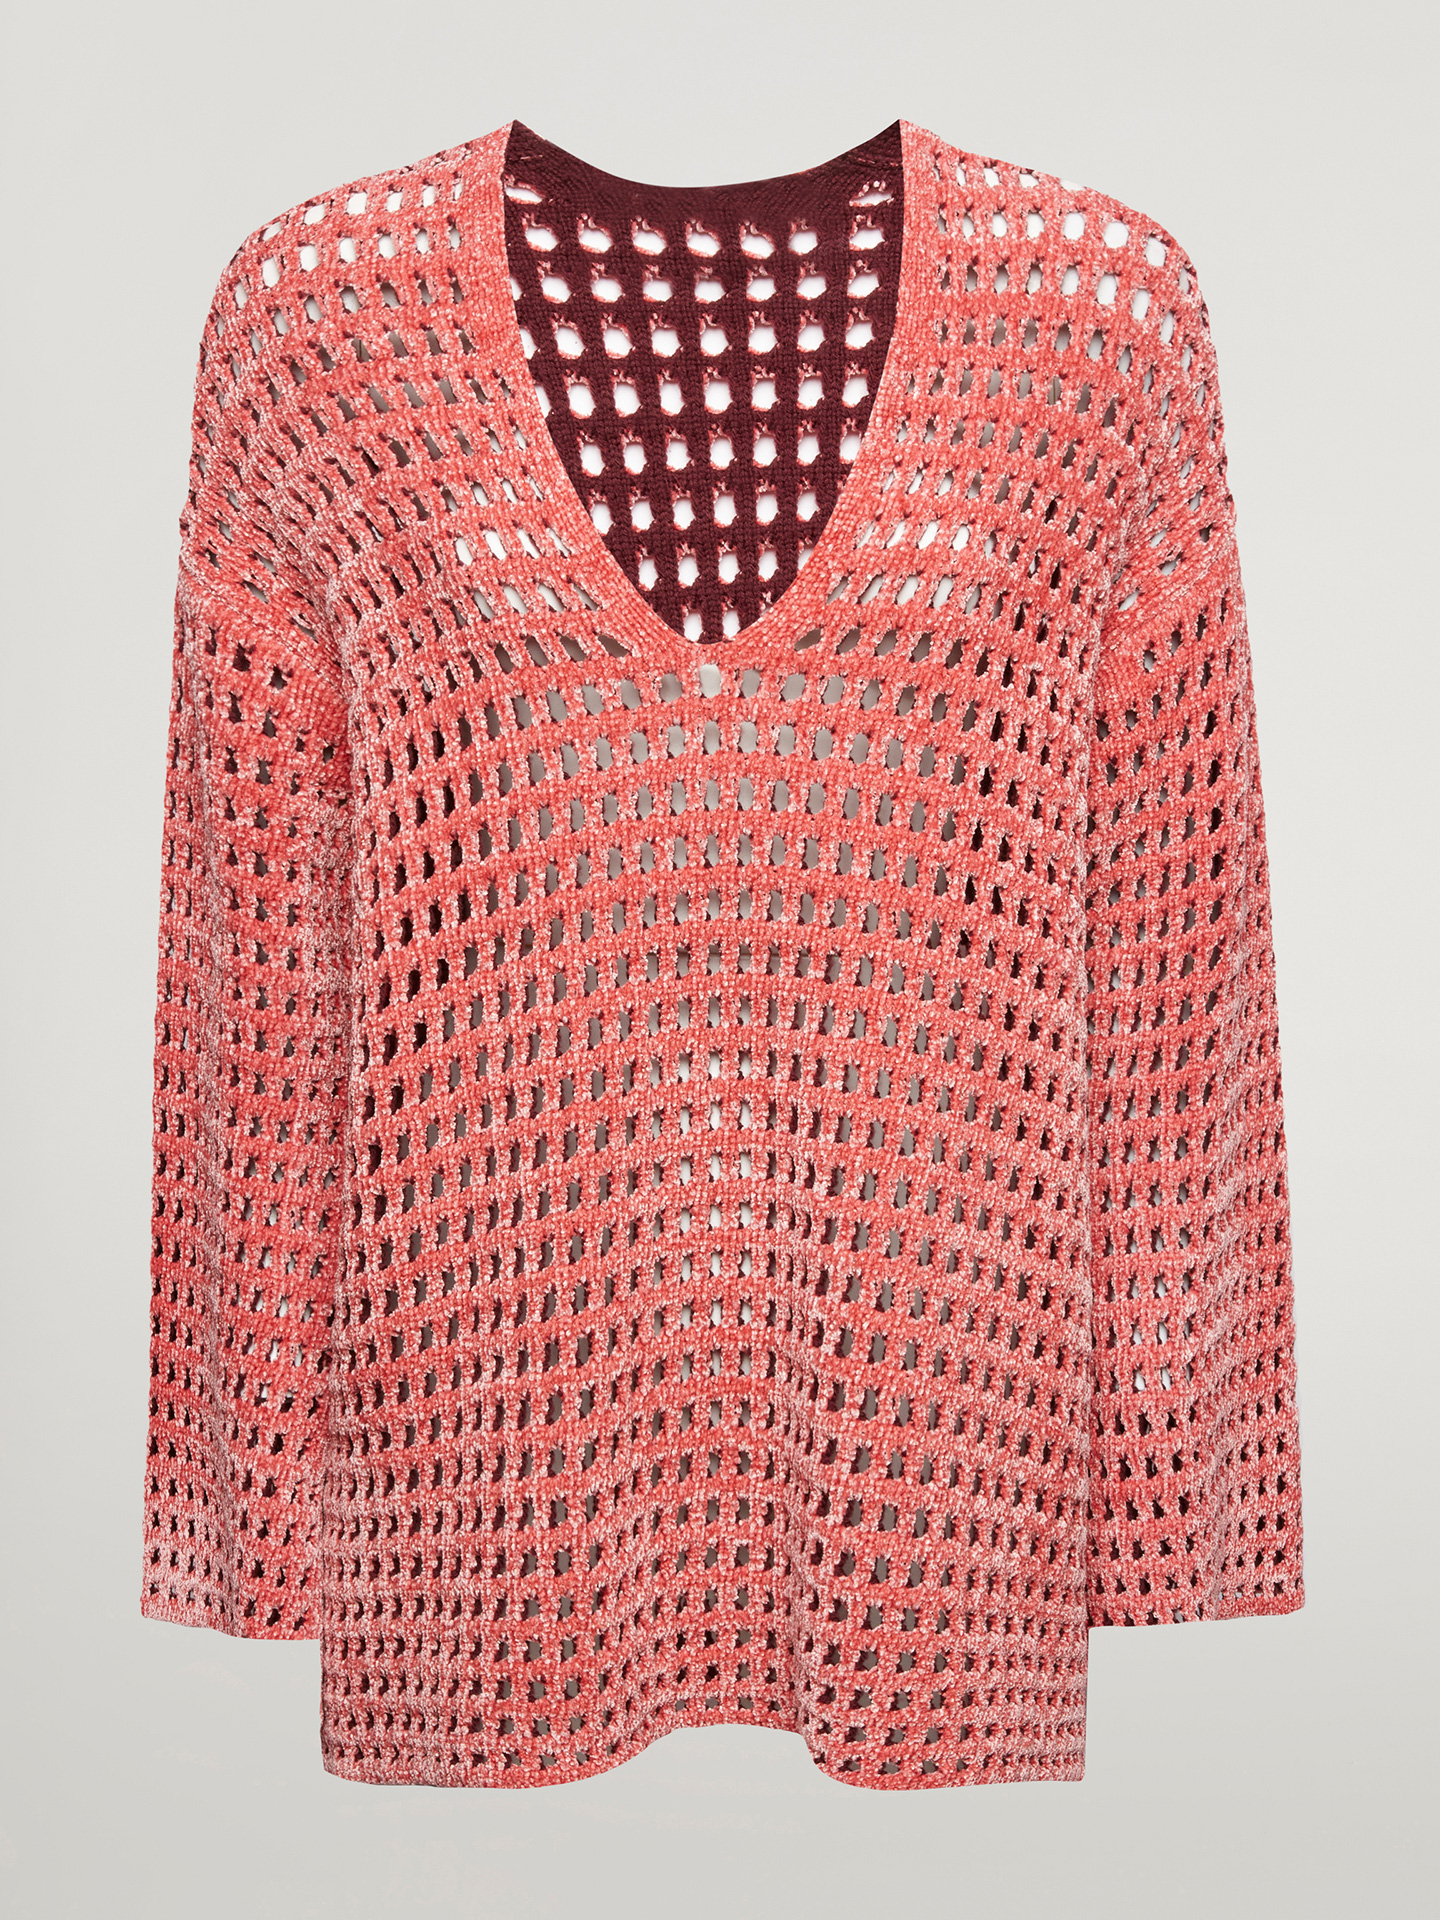 Wolford - Knit Net Top Long Sleeves, Frau, brandied apricot, Größe: L günstig online kaufen